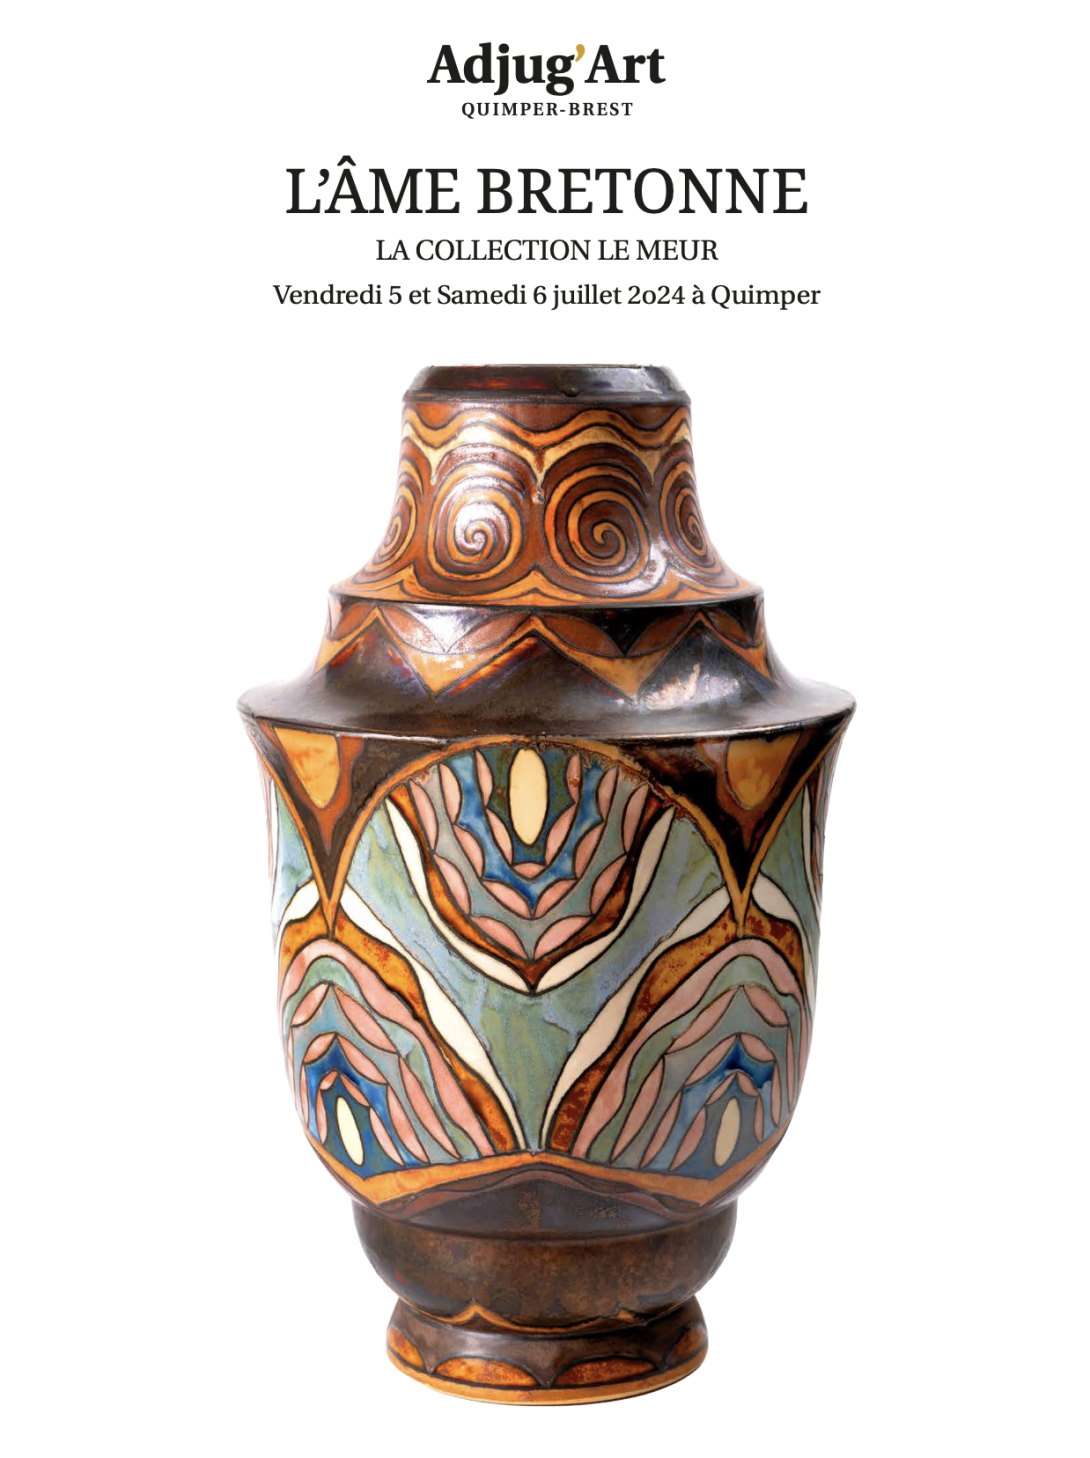 Âme bretonne catalogue summer 2023